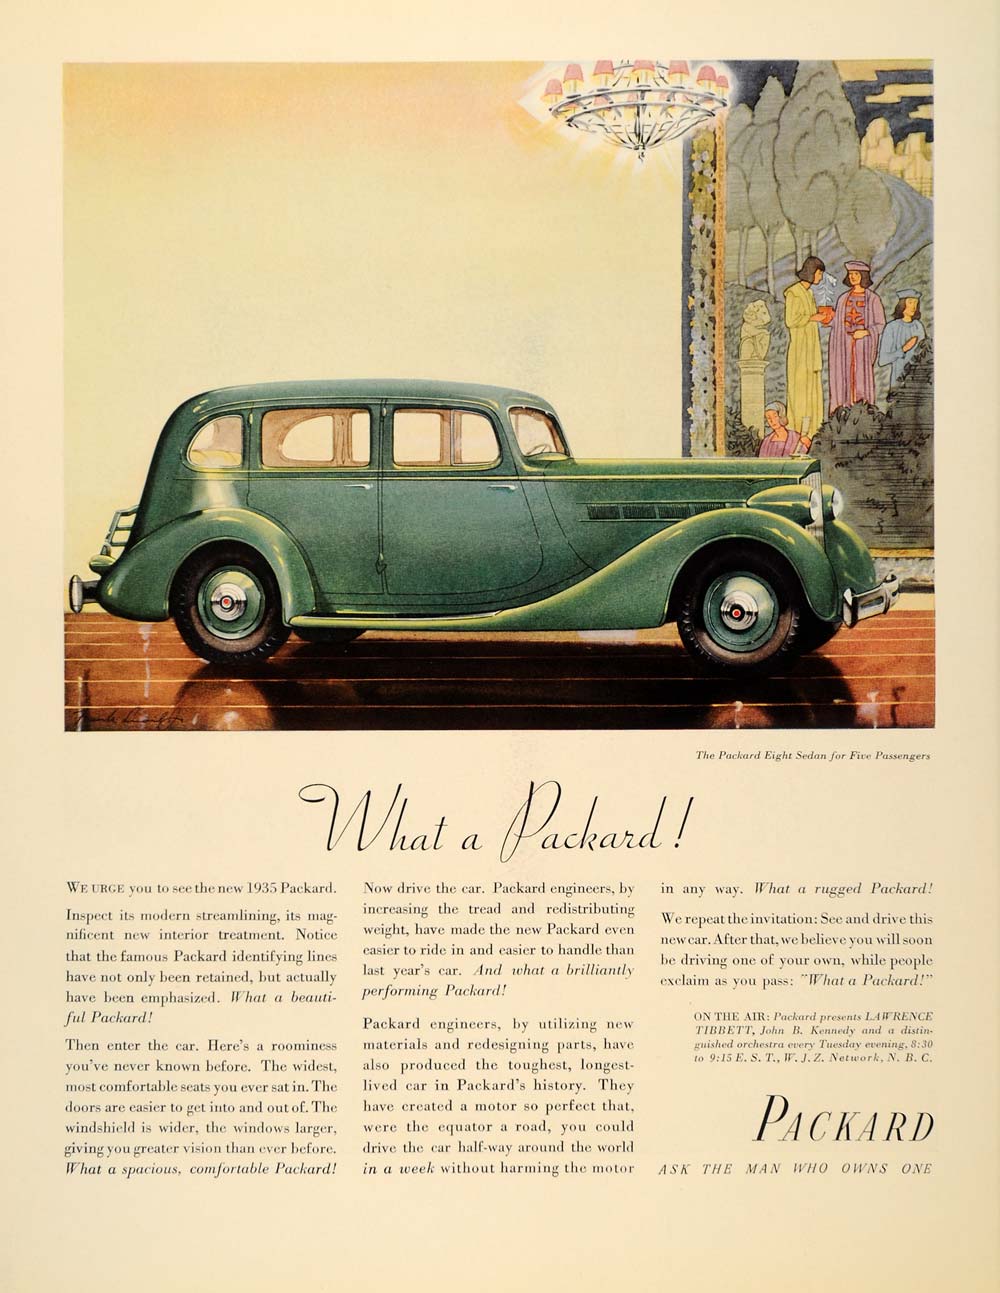 1934 Ad Vintage Packard Automobiles John B. Kennedy NBC - ORIGINAL FTT9